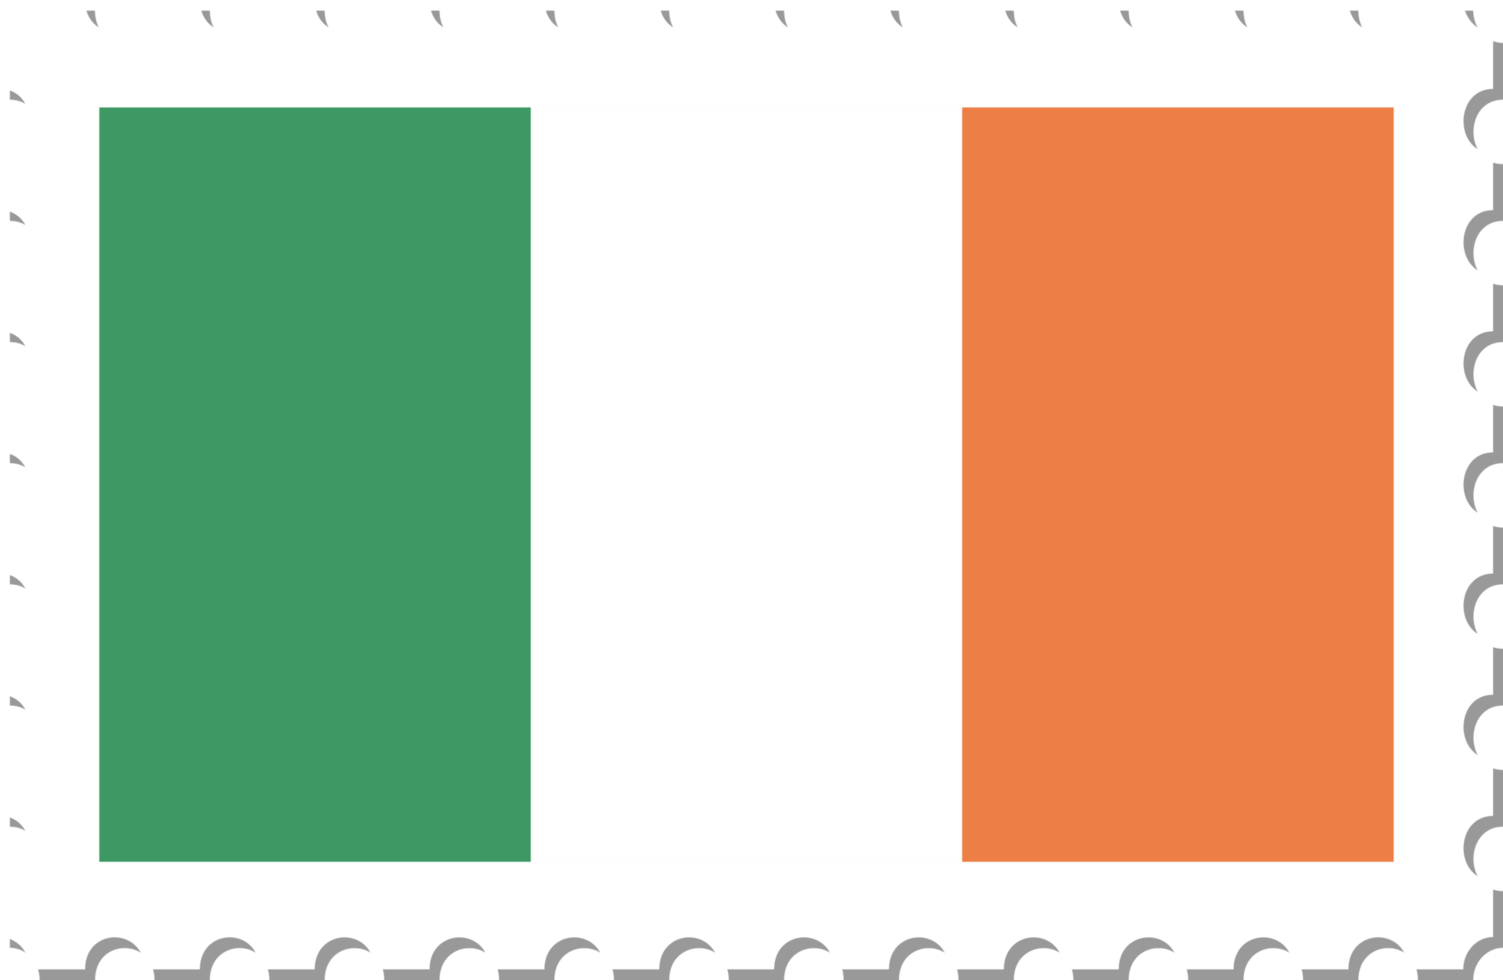 selo postal da bandeira da Irlanda. png